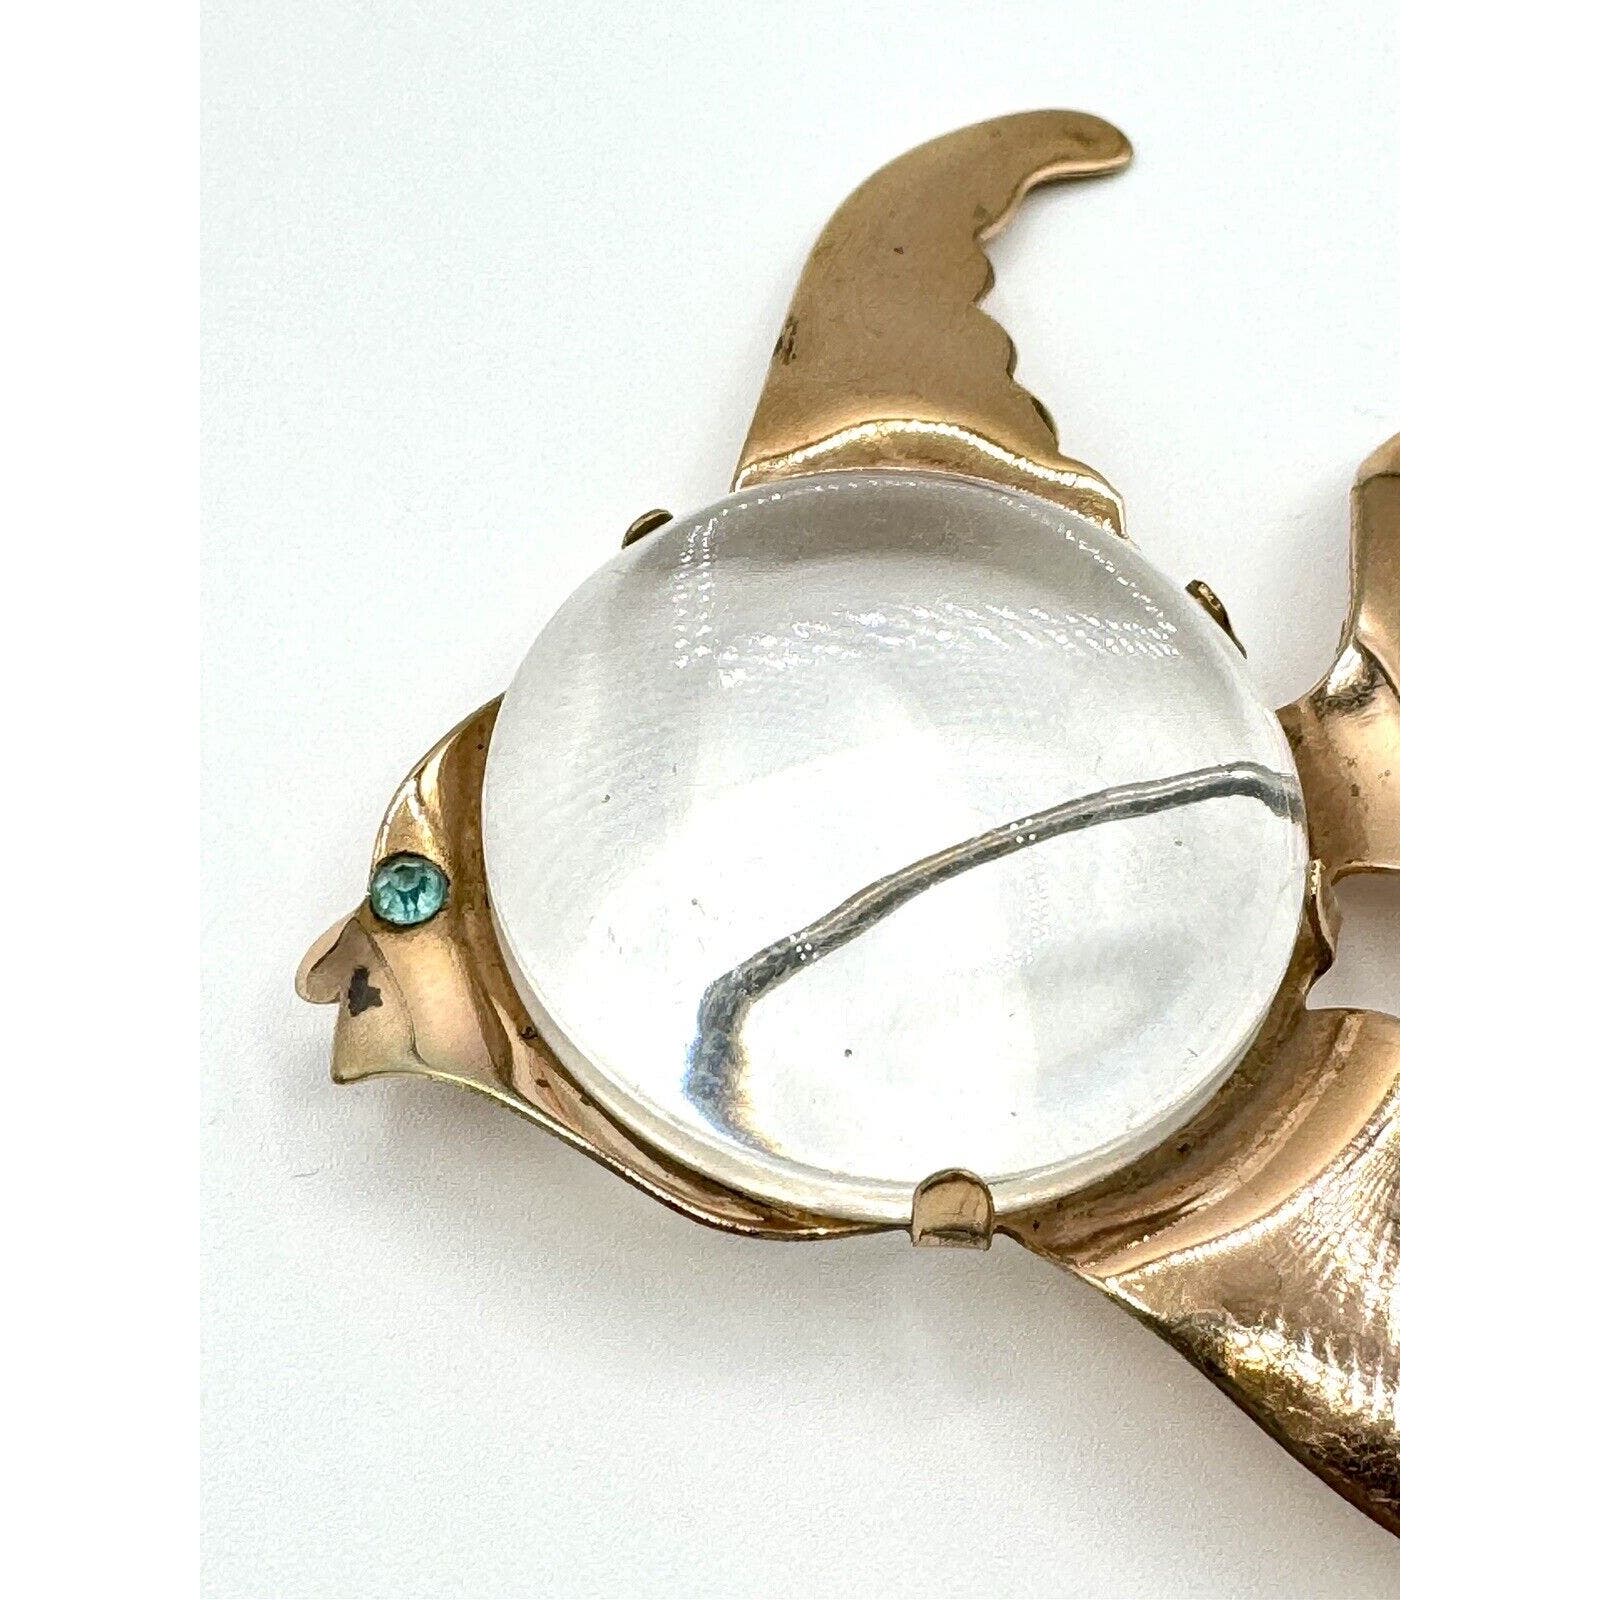 UnbrandedVintage 1940’s Jelly Belly Angel Fish Brooch Pin Gold Tone Blue Rhinestone Eye - Black Dog Vintage